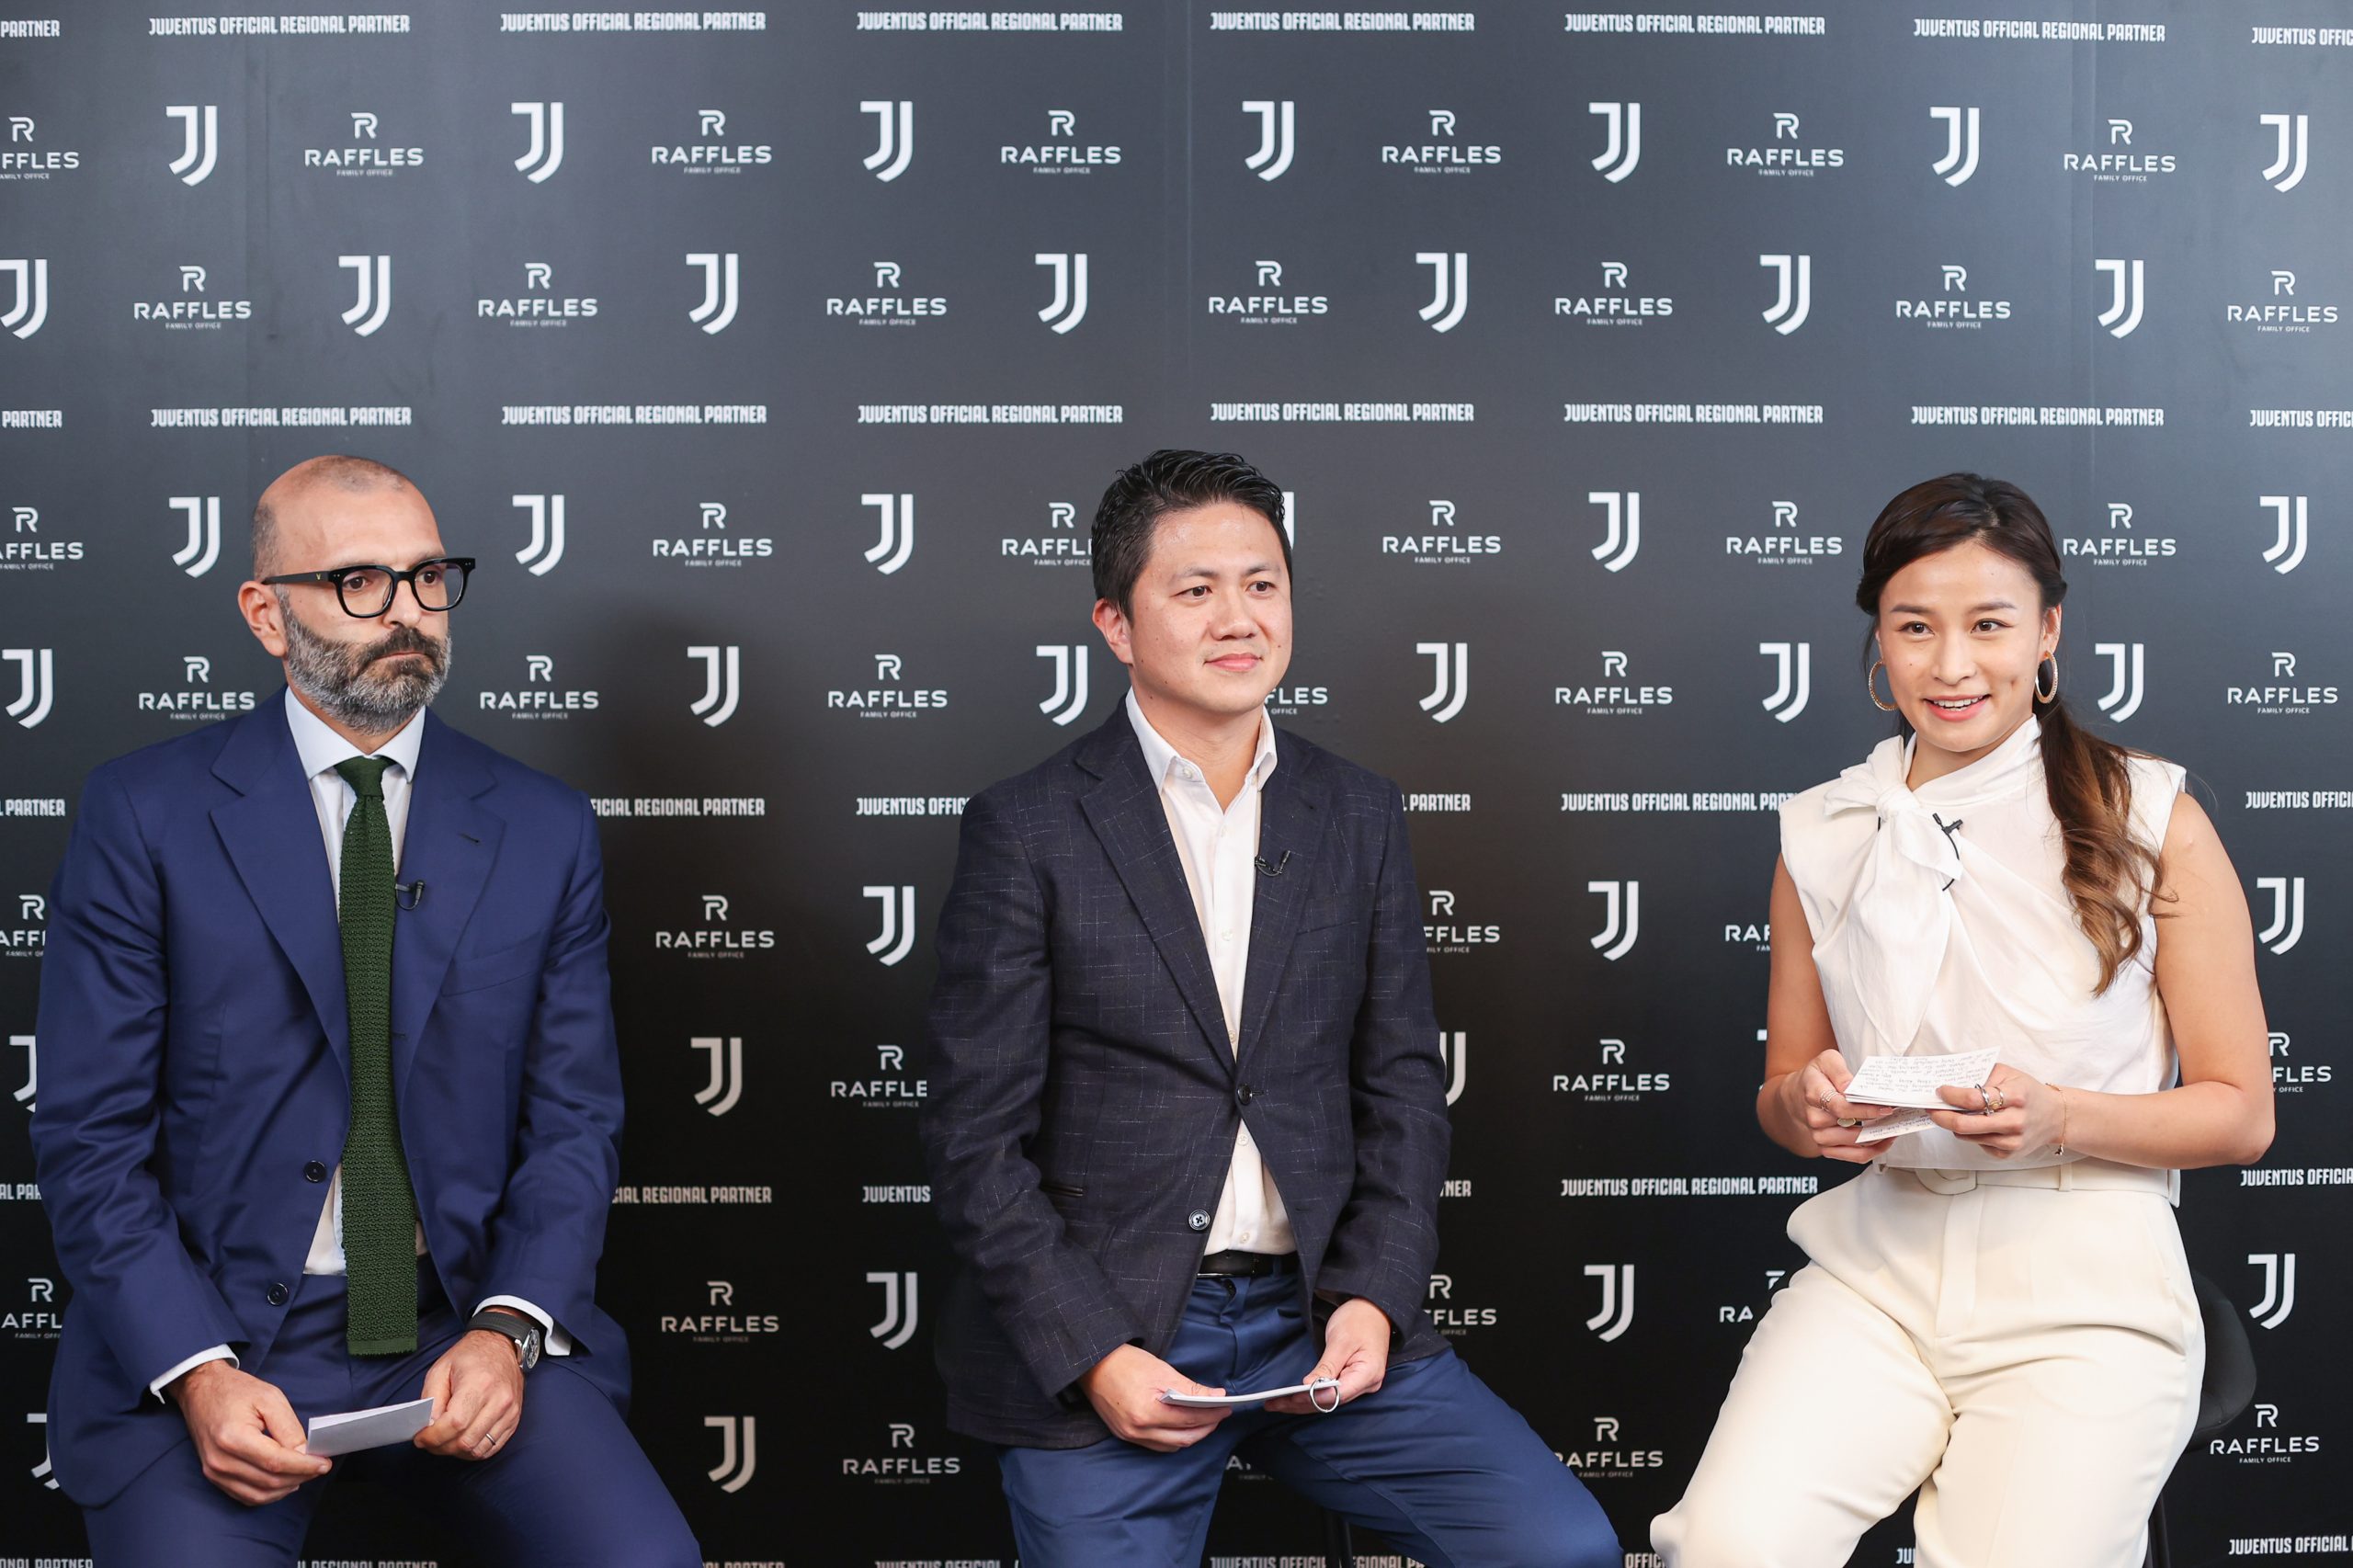 Juventus Football Club - Official Website